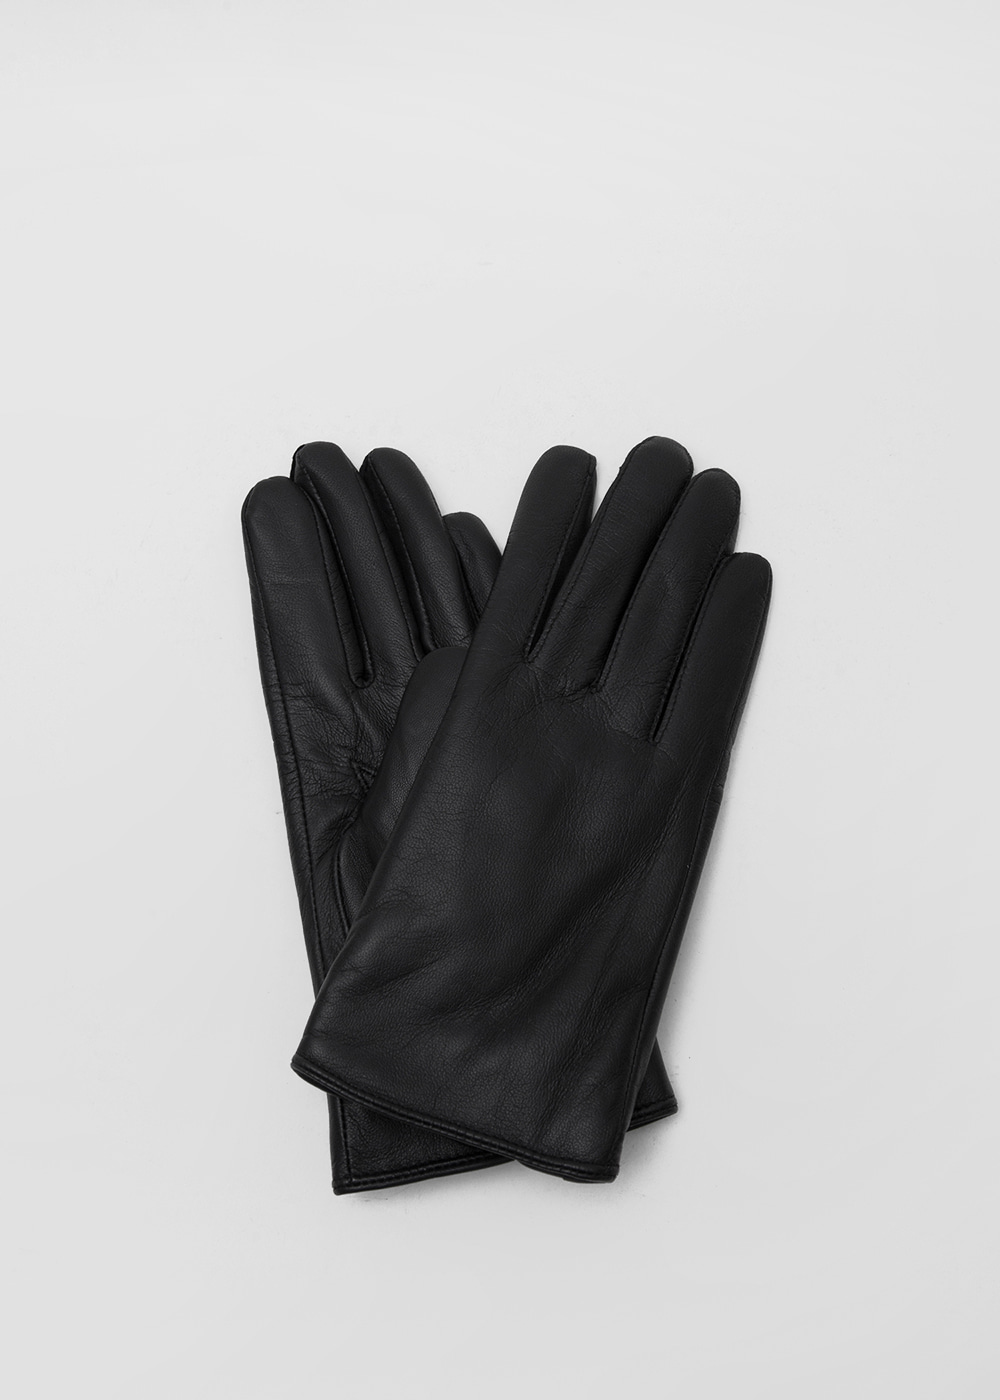 21FW Winter leather gloves [촬영샘플]